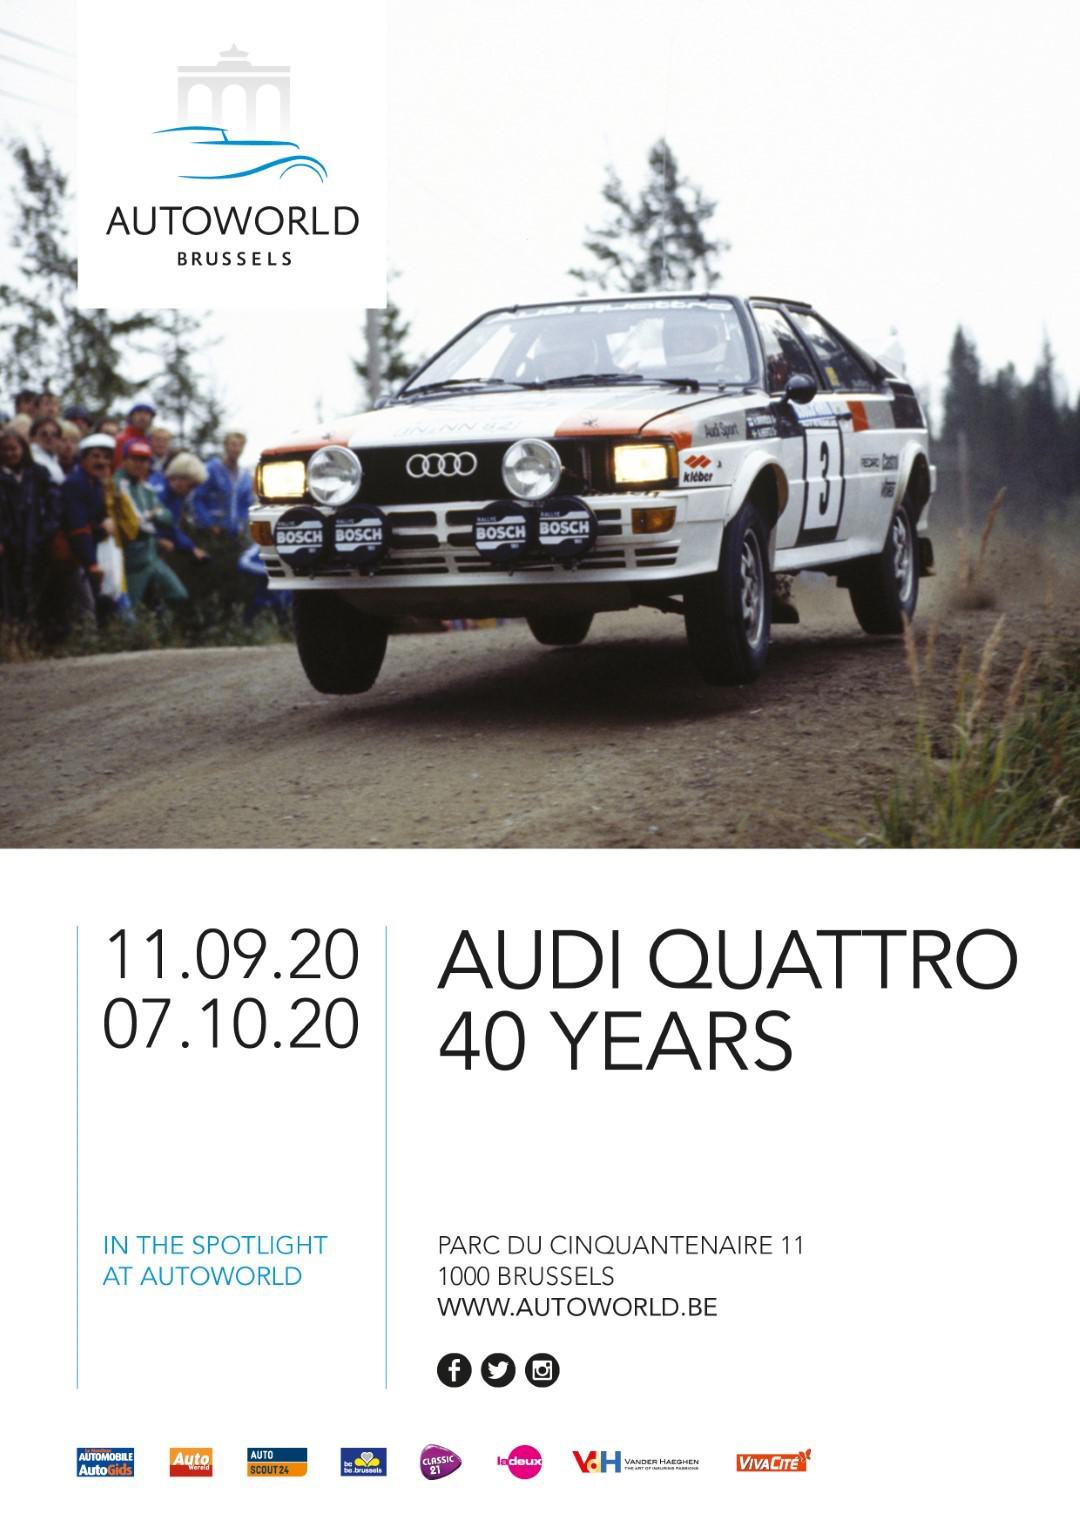 audi-quattro-40-years-in-the-spotlight-autoworld-brussels-1336-5.jpg